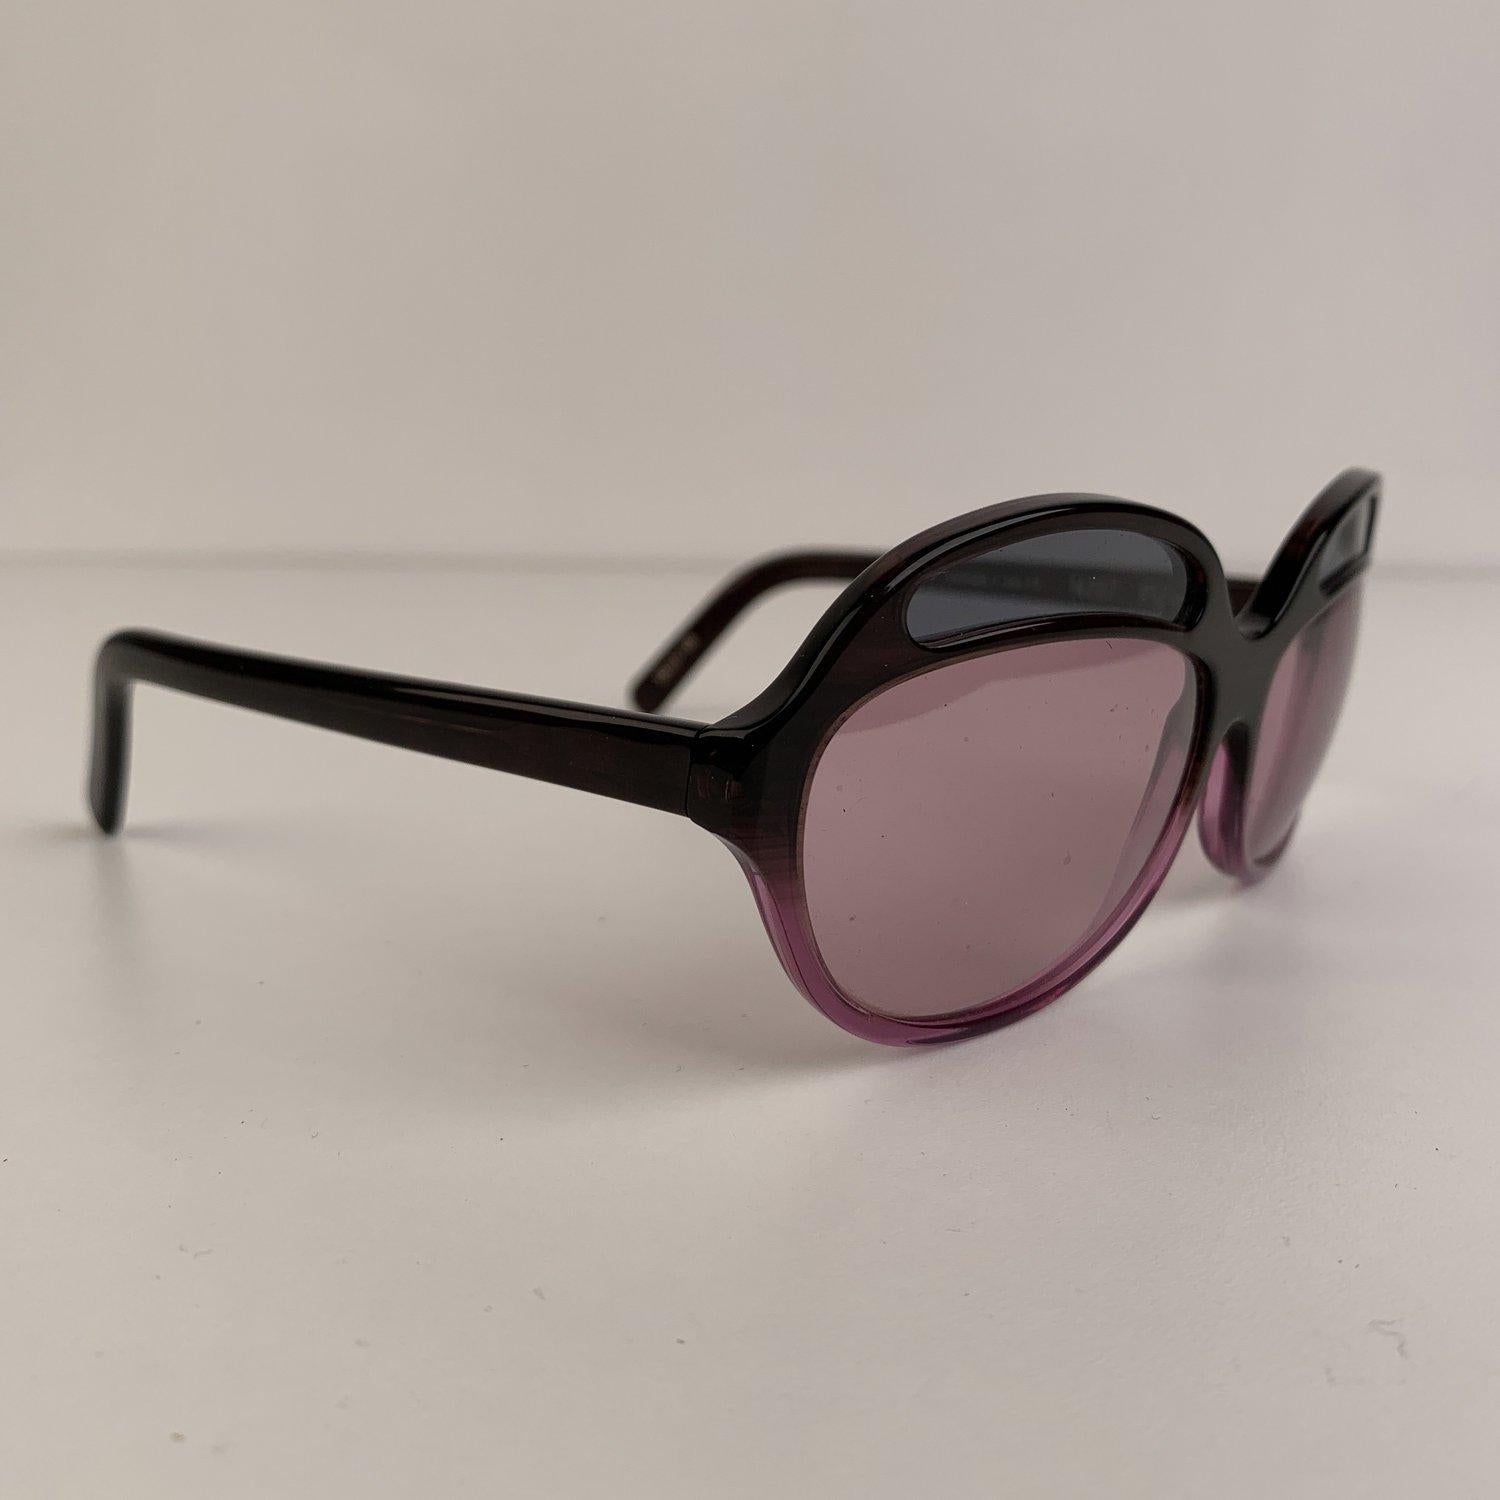 bug sunglasses